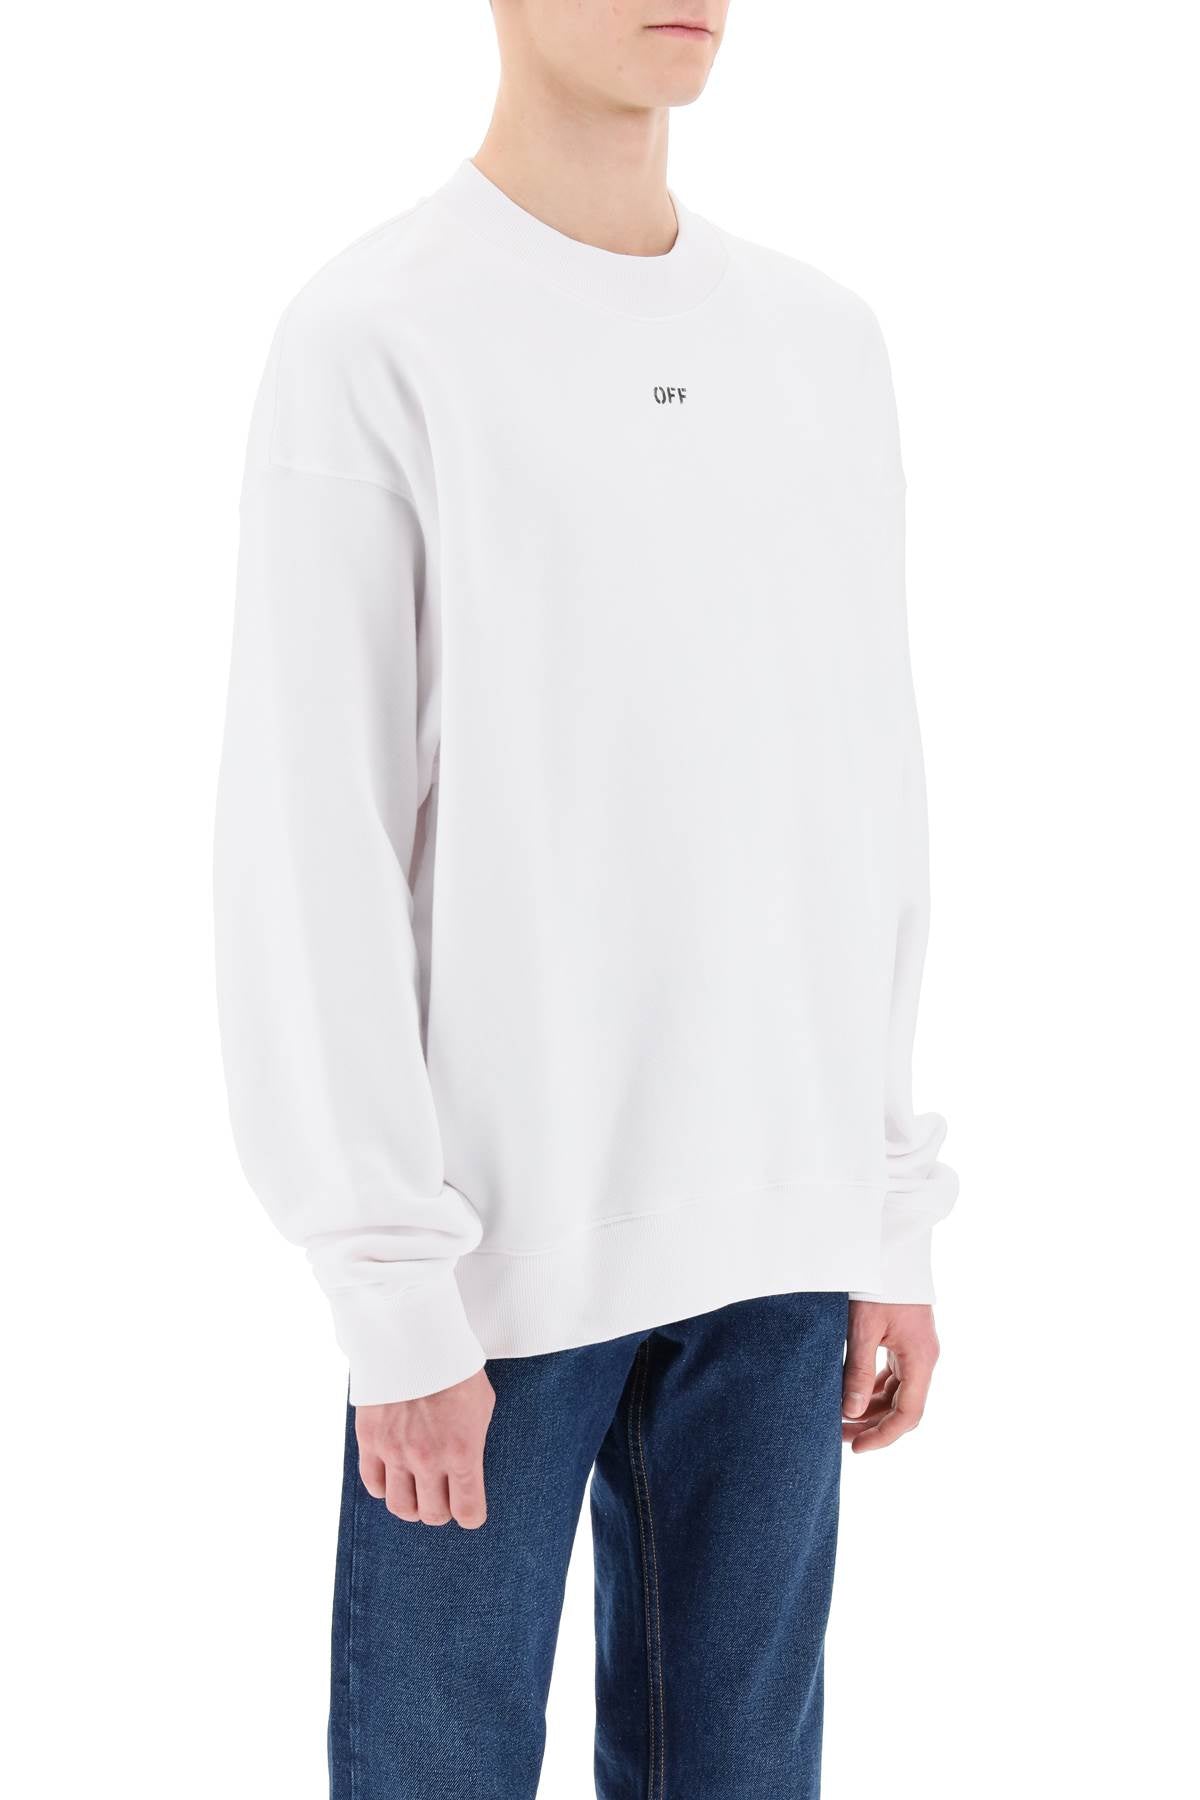 Off-white skate sweatshirt with off logo-1